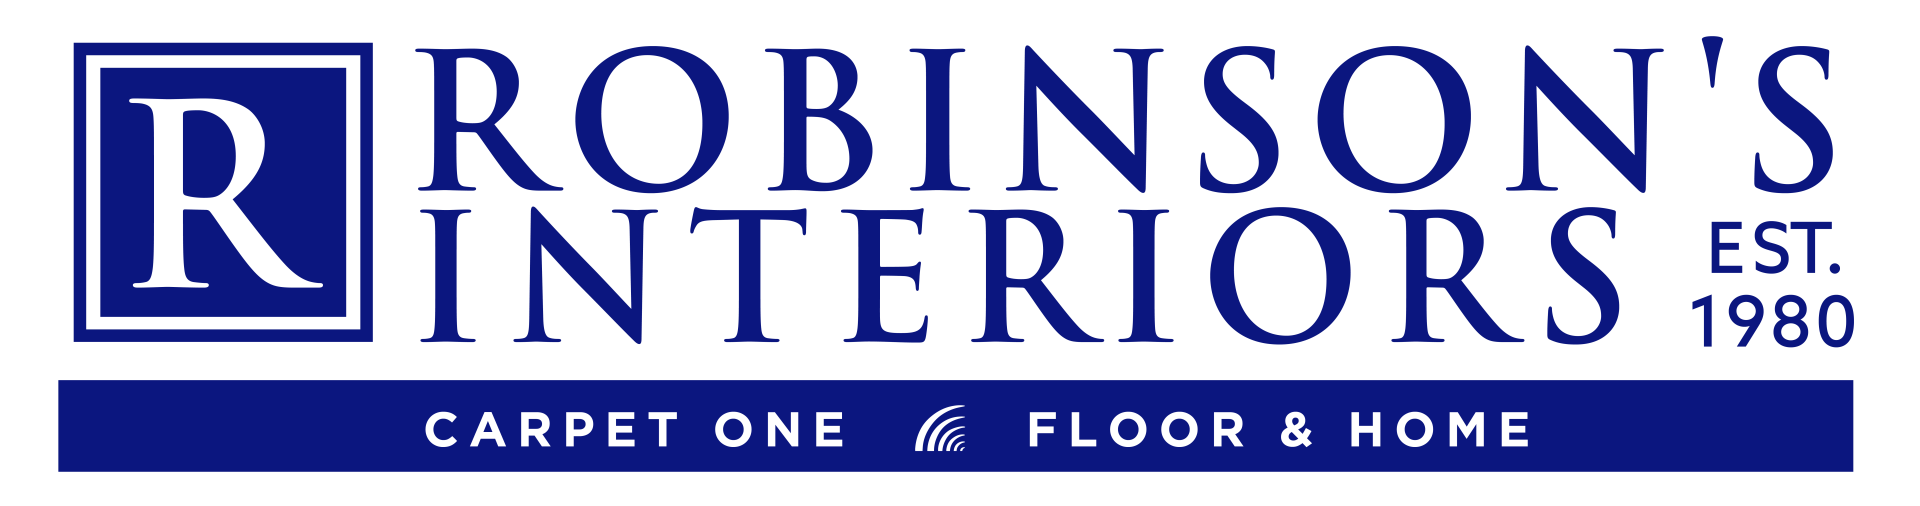 Logo for Robinson's Interiors Carpet One, Flooring in Fresno, Hanford, CA